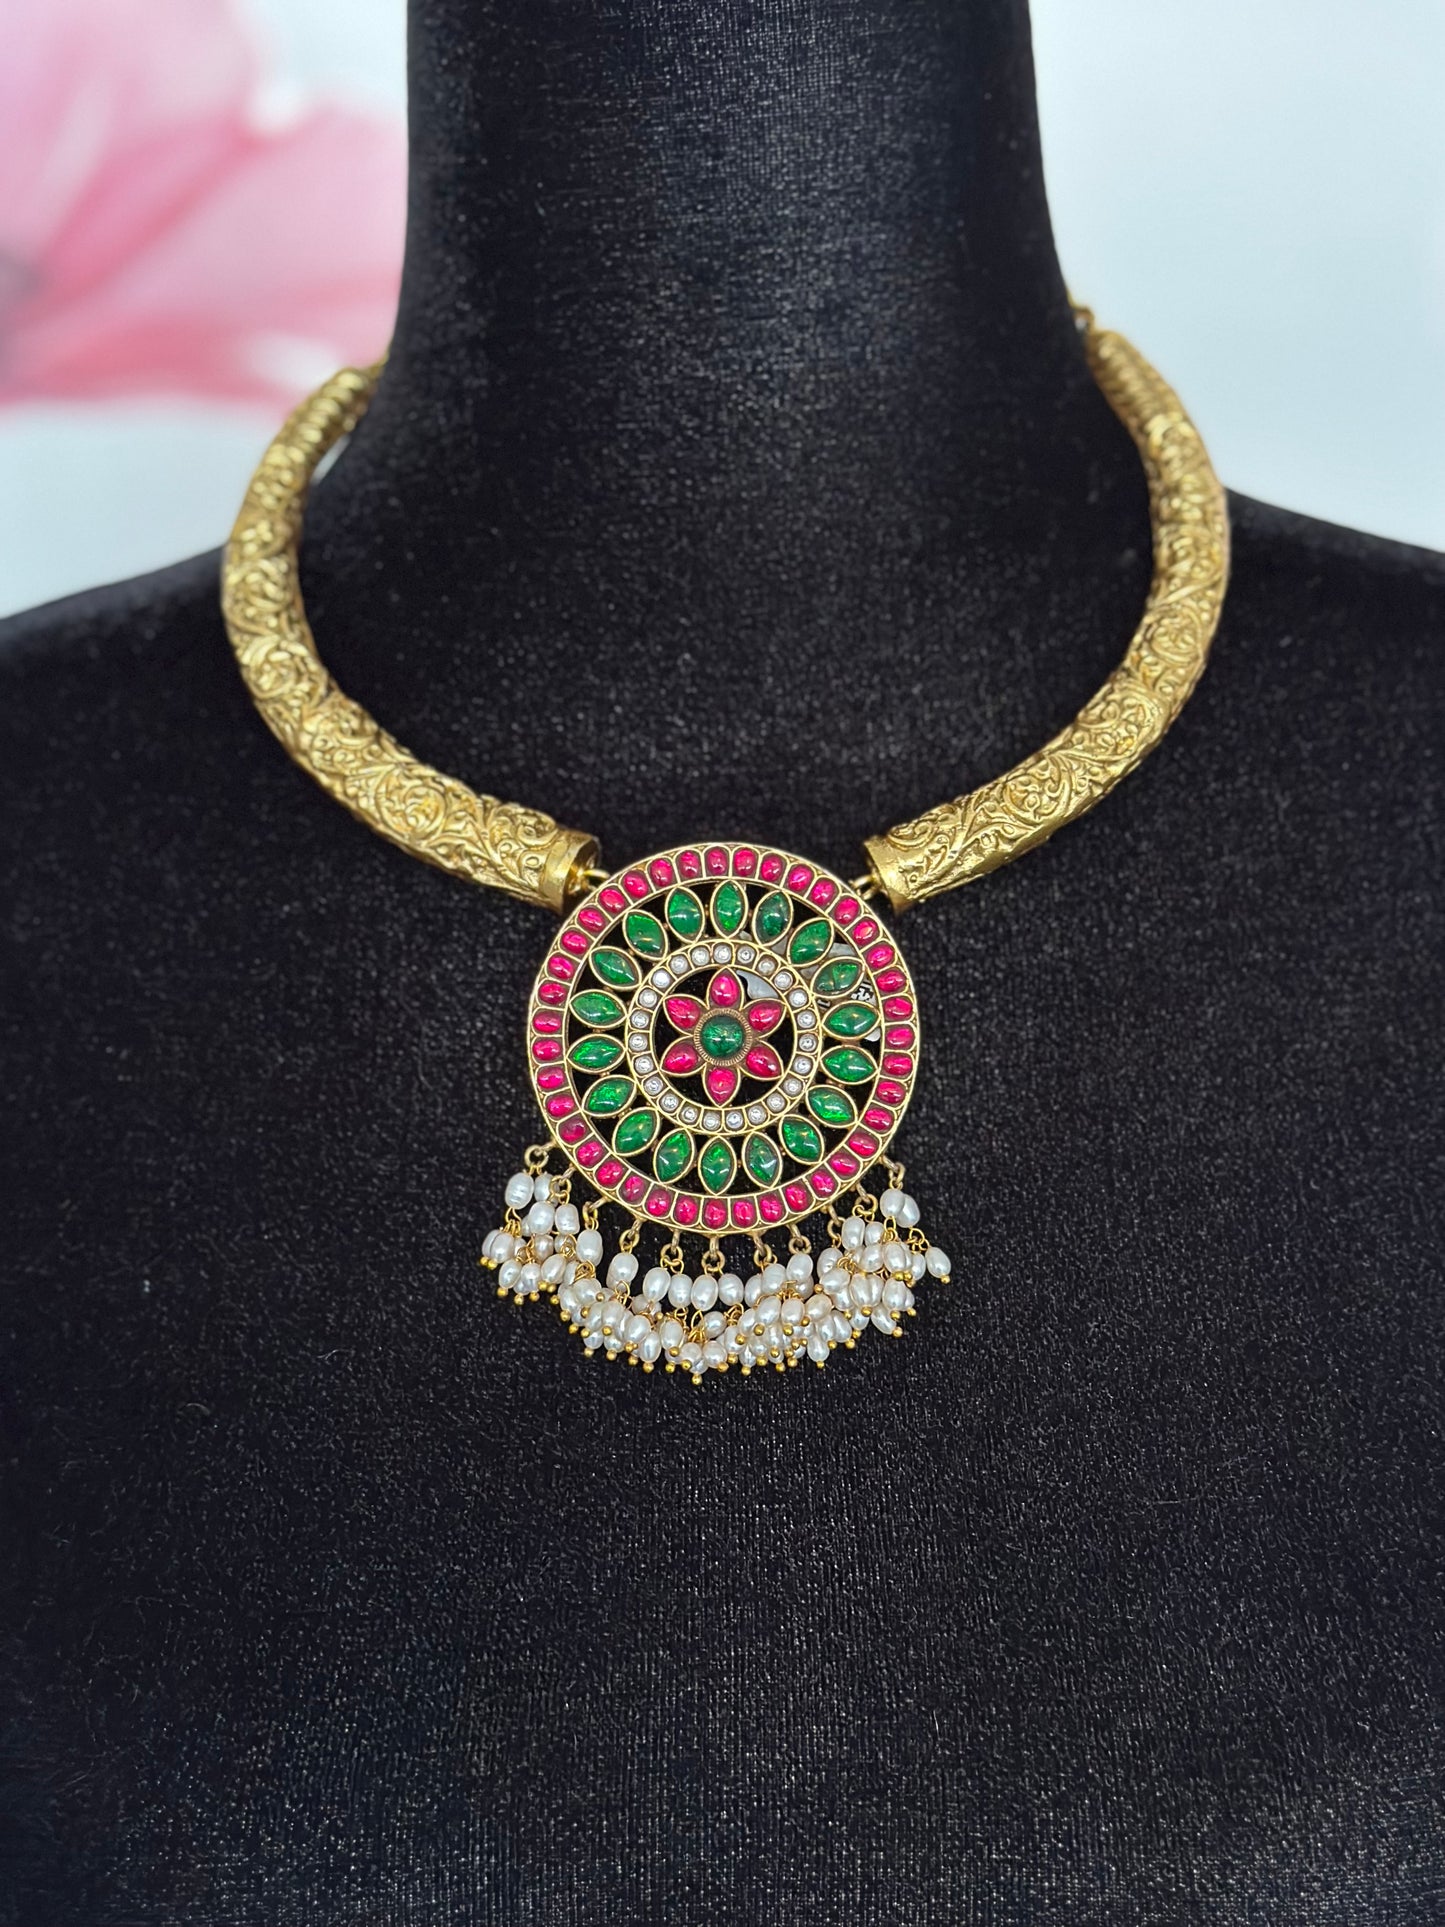 Jadau kundan with rice pearls pendant hasli | Latest Indian jewelry